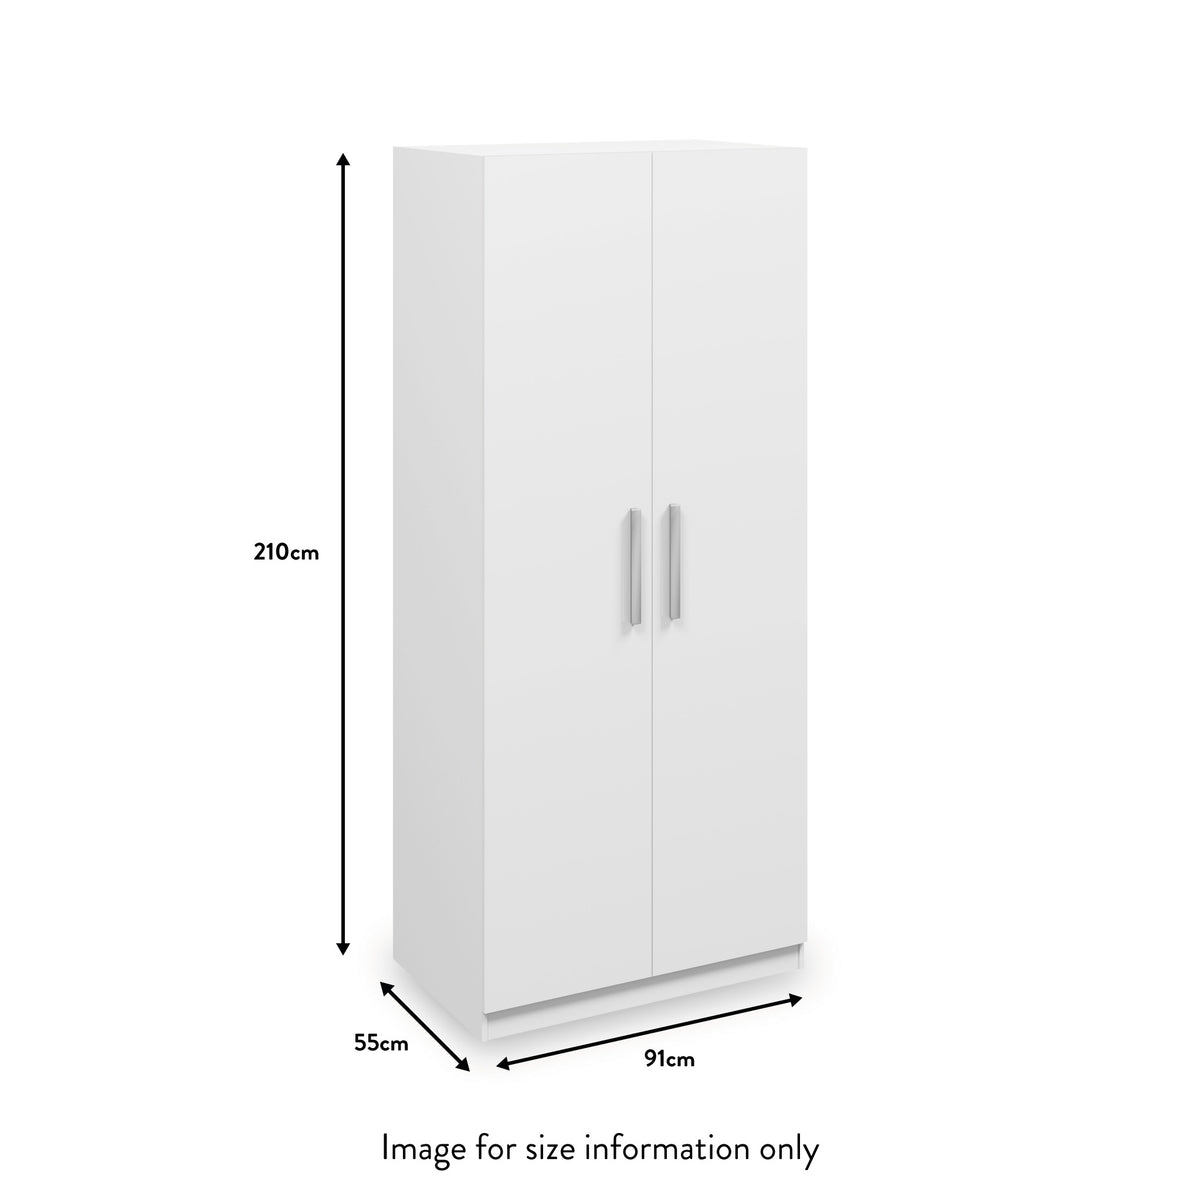 Meribel White 2 Door Wardrobe dimensions